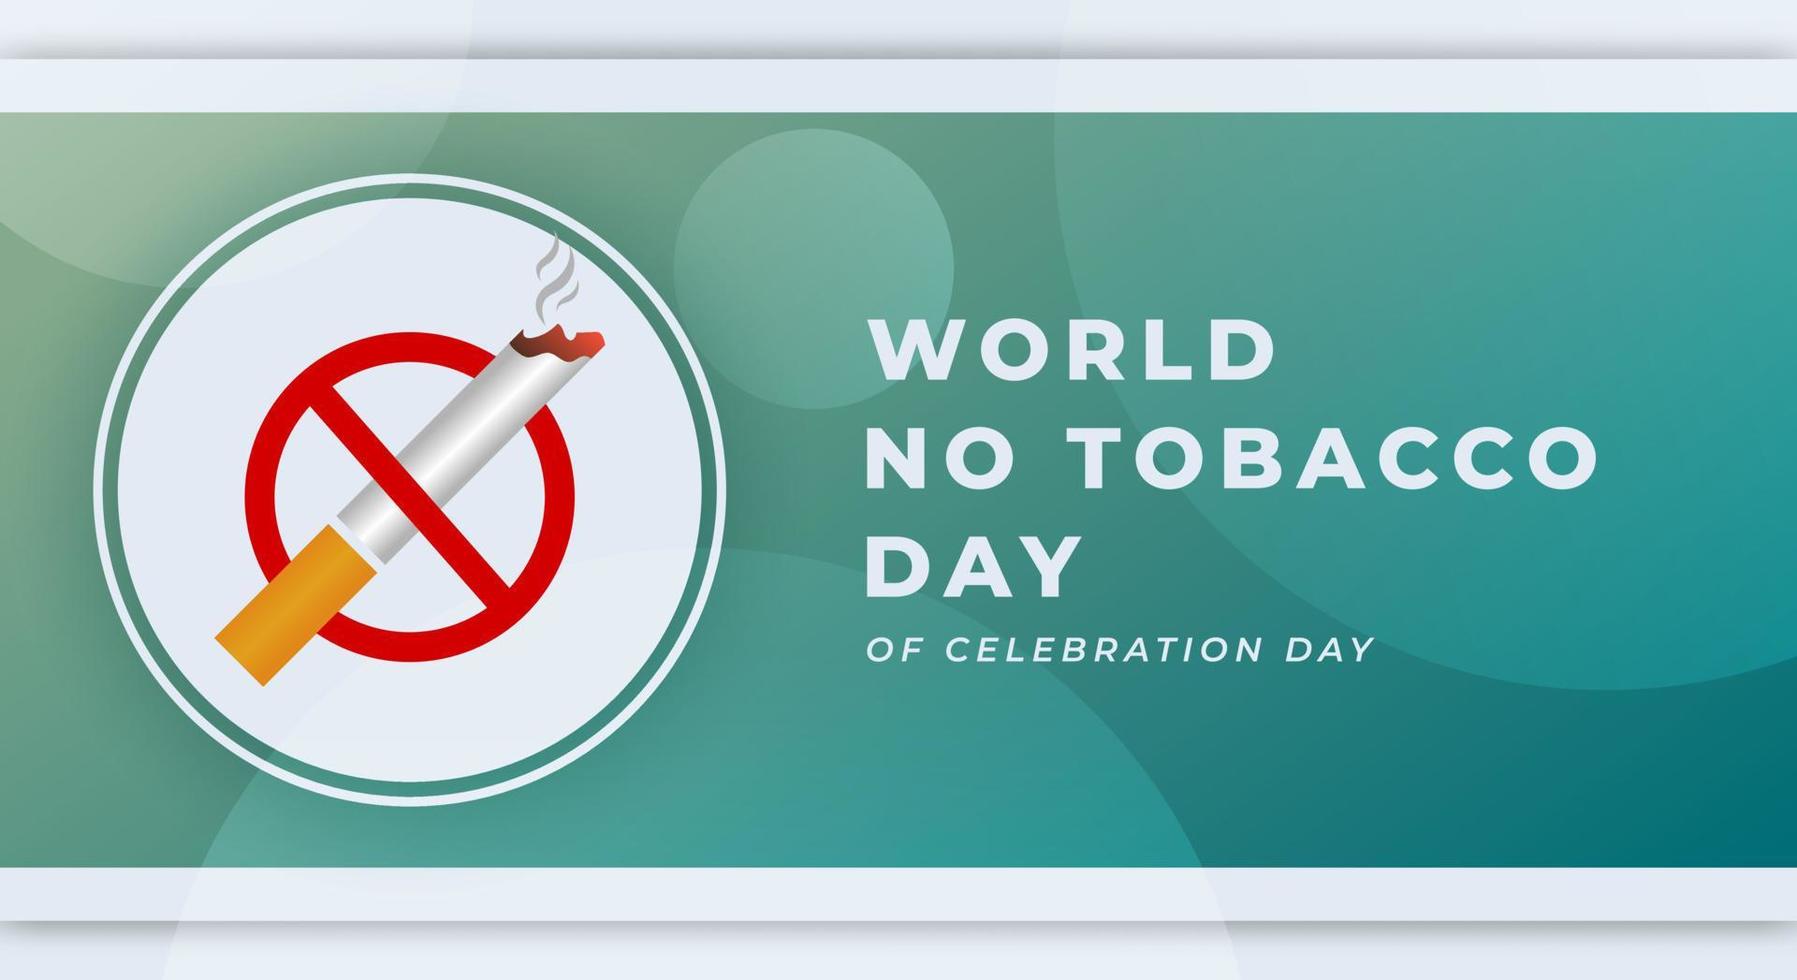 World no Tobacco Day Celebration Vector Design Illustration for Background, Poster, Banner, Advertising, Greeting Card